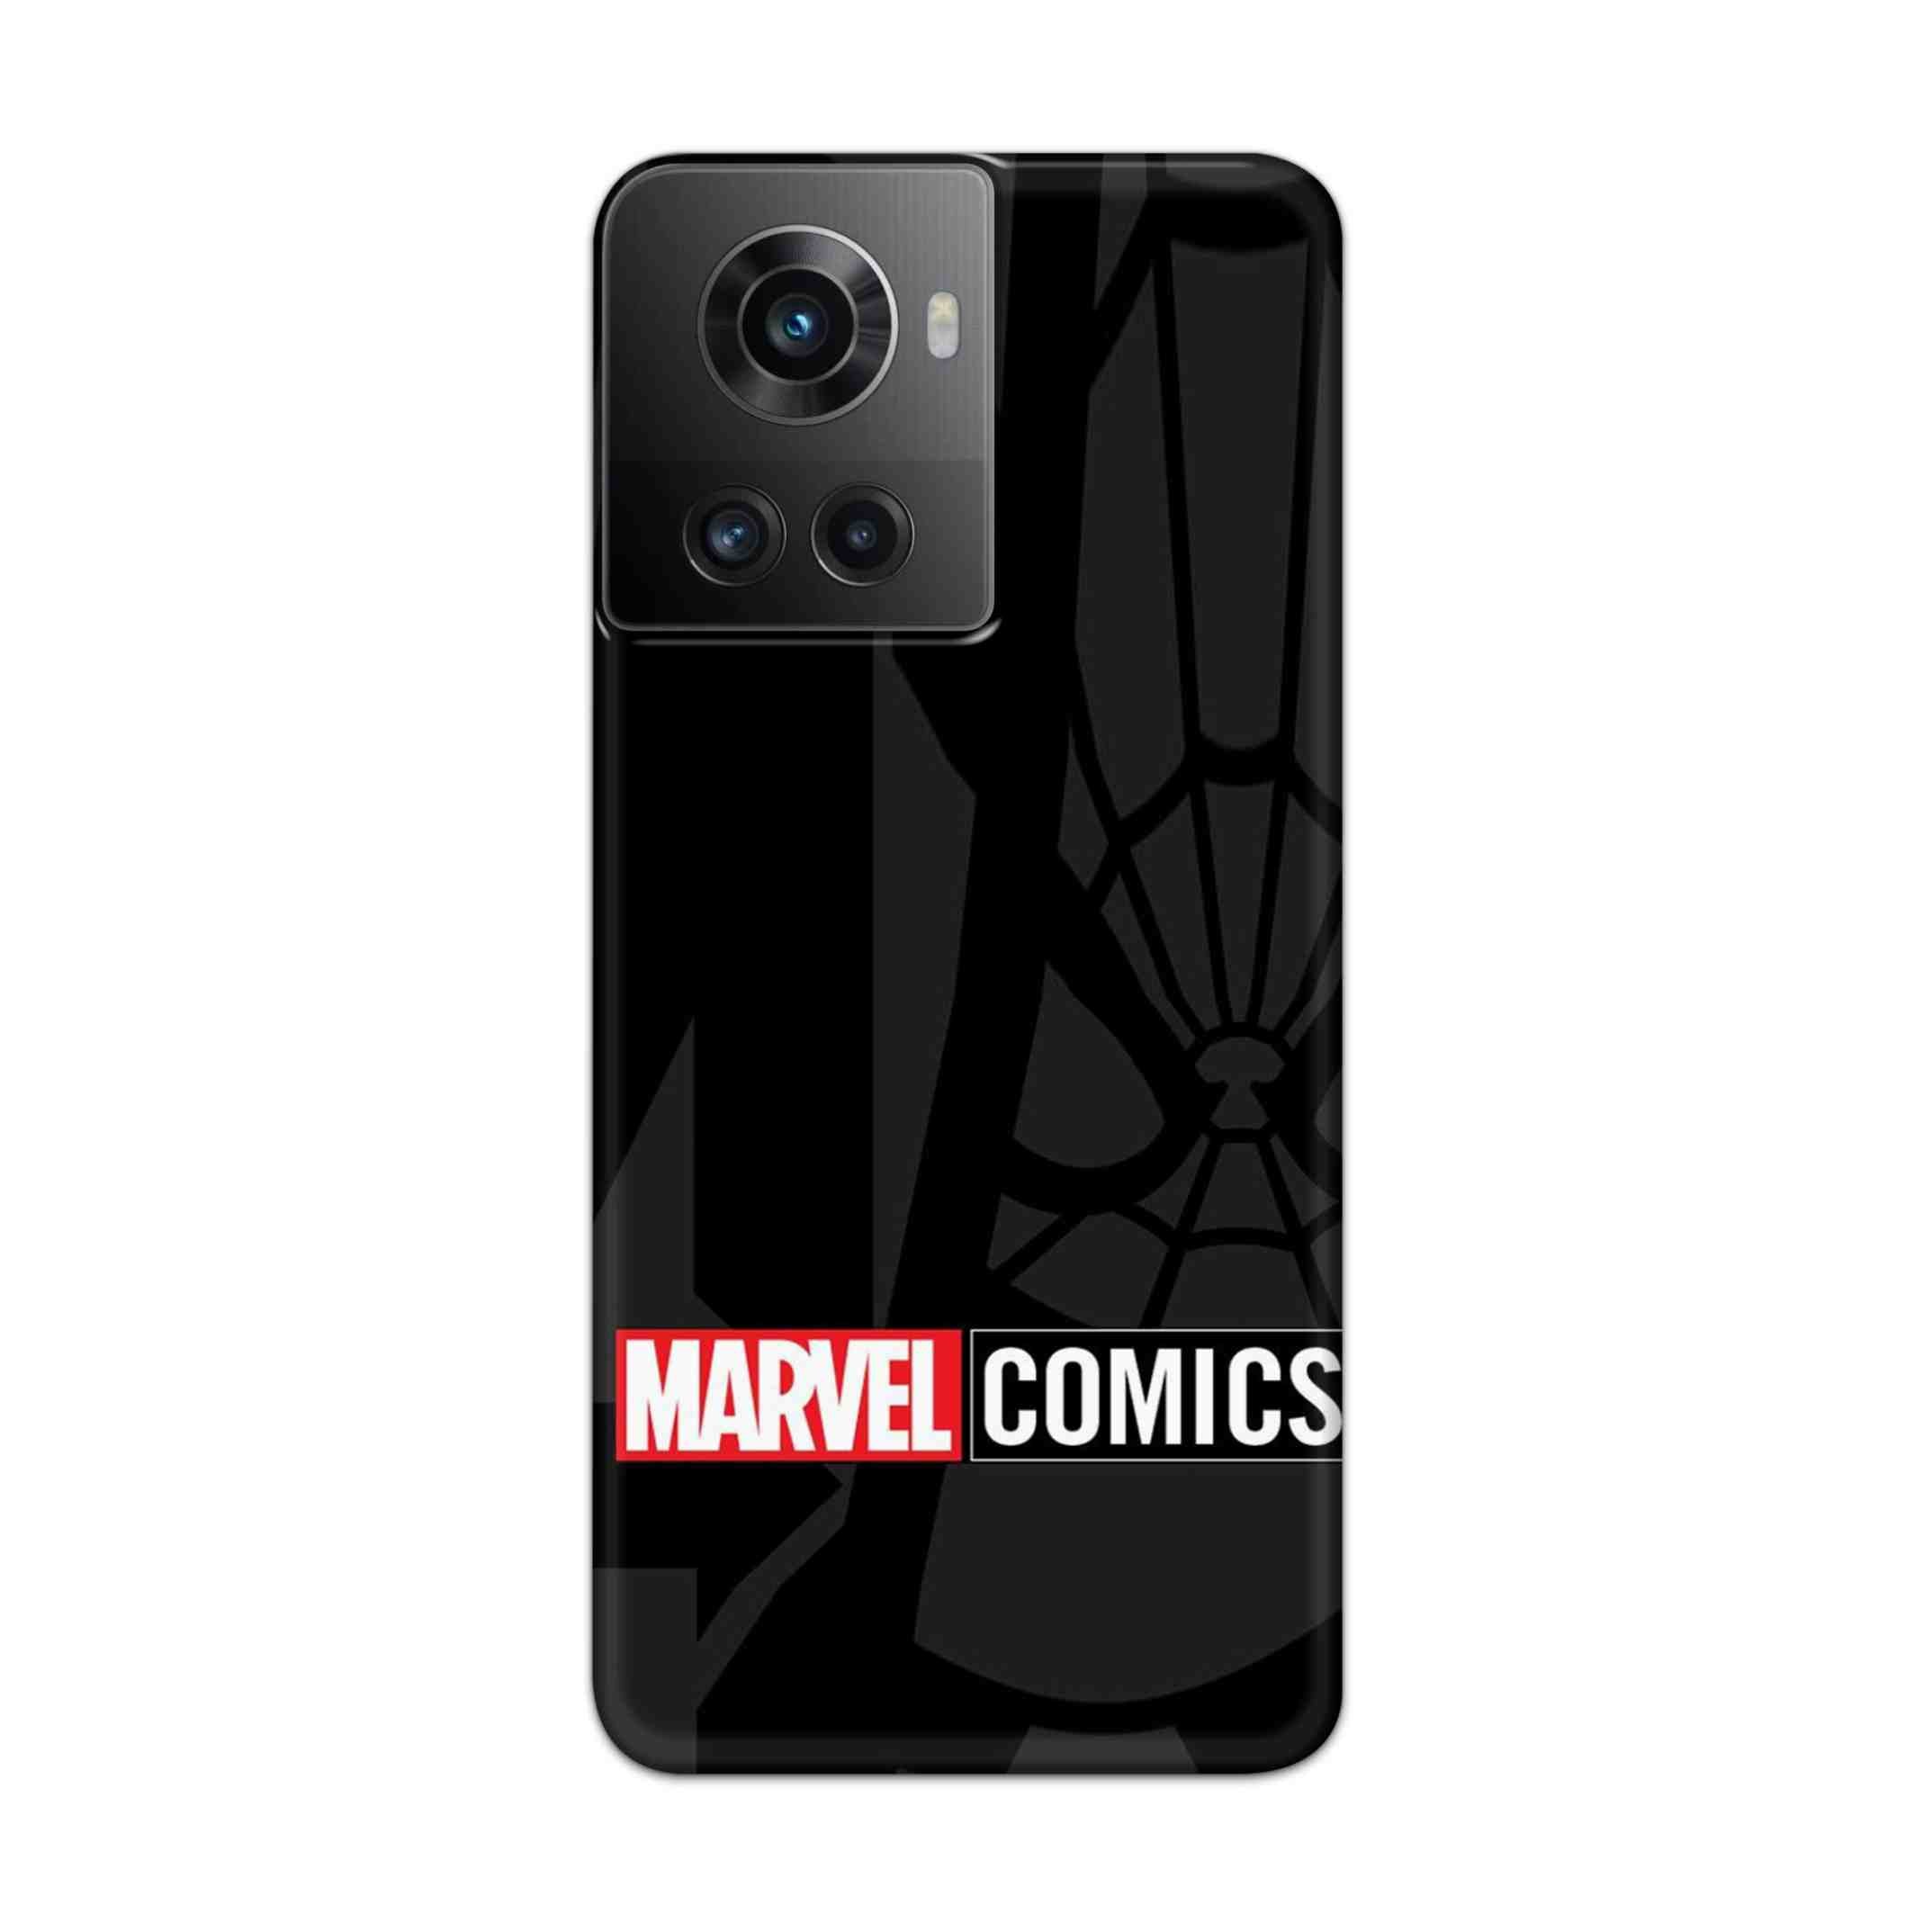 Buy Marvel Comics Hard Back Mobile Phone Case Cover For Oneplus 10R Online